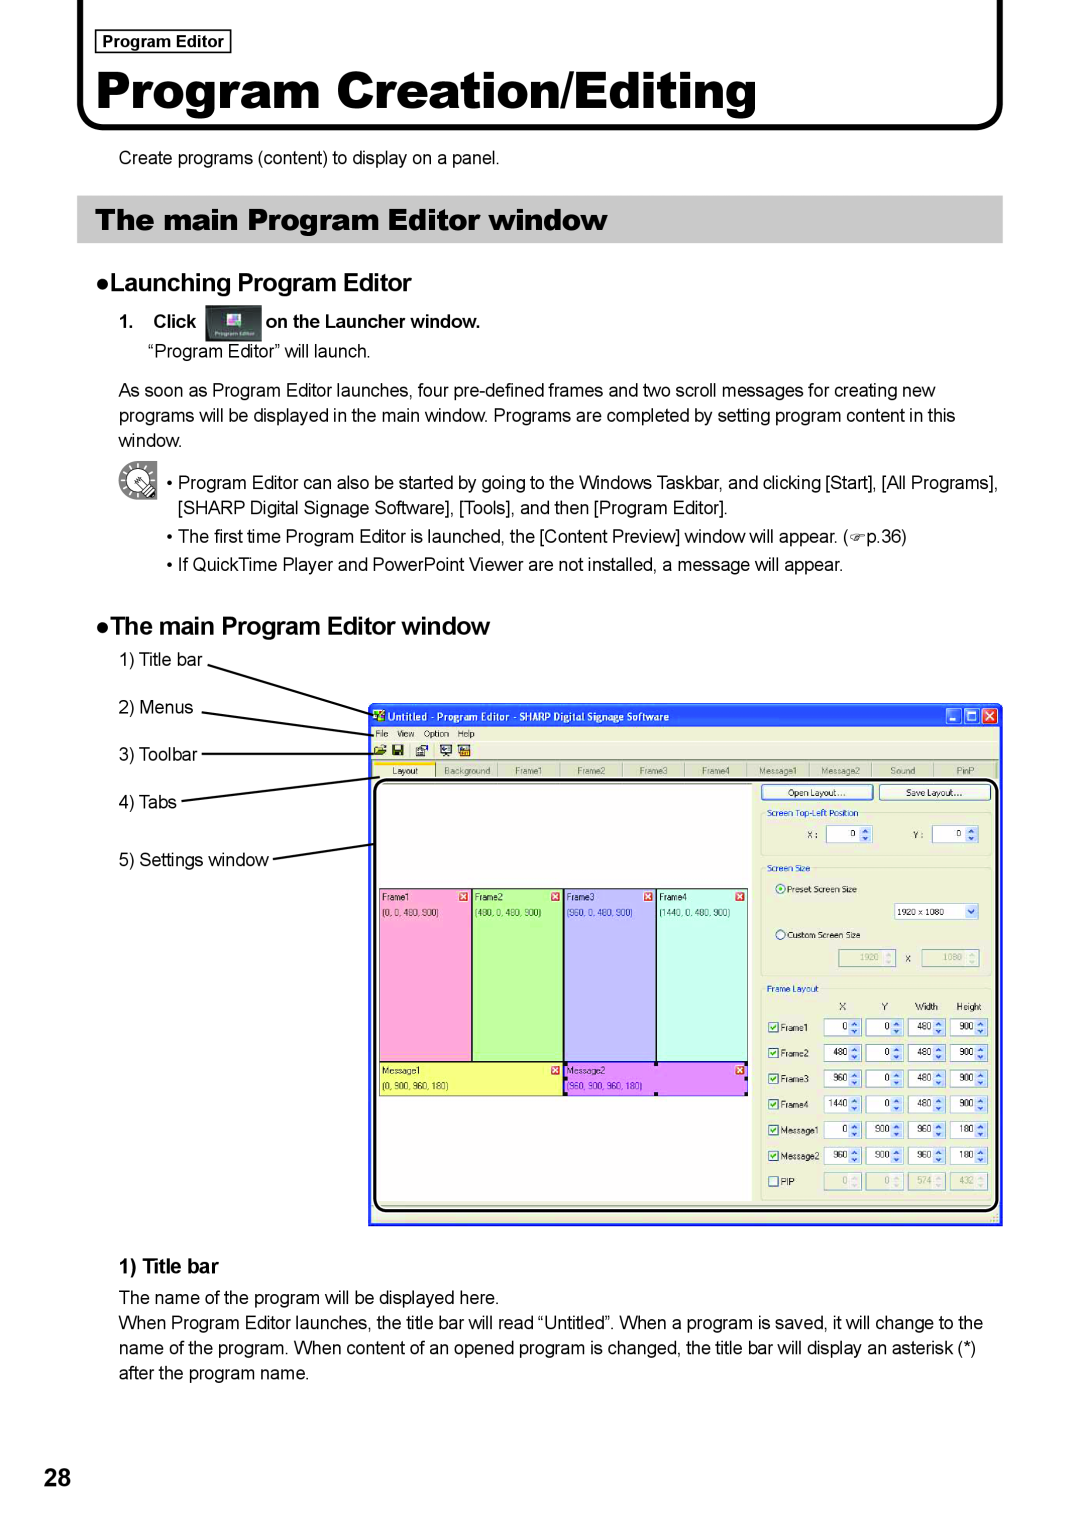 Sharp PNSV01 Program Creation/Editing, The main Program Editor window, Launching Program Editor, Title bar, Click 